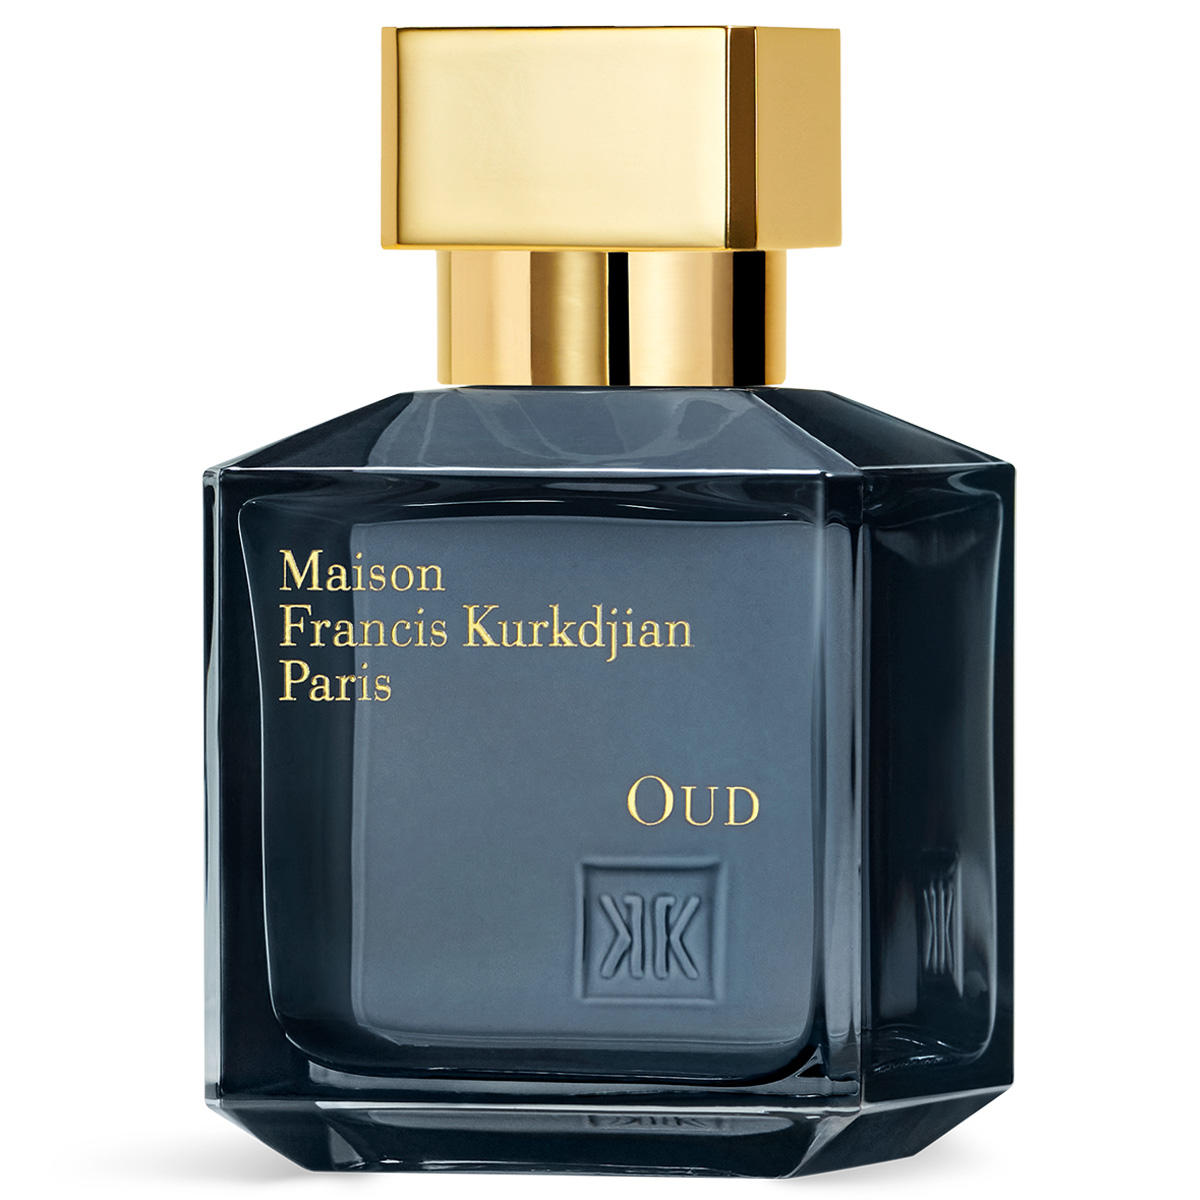 Maison Francis Kurkdjian Paris OUD Eau de Parfum 70 ml - 3